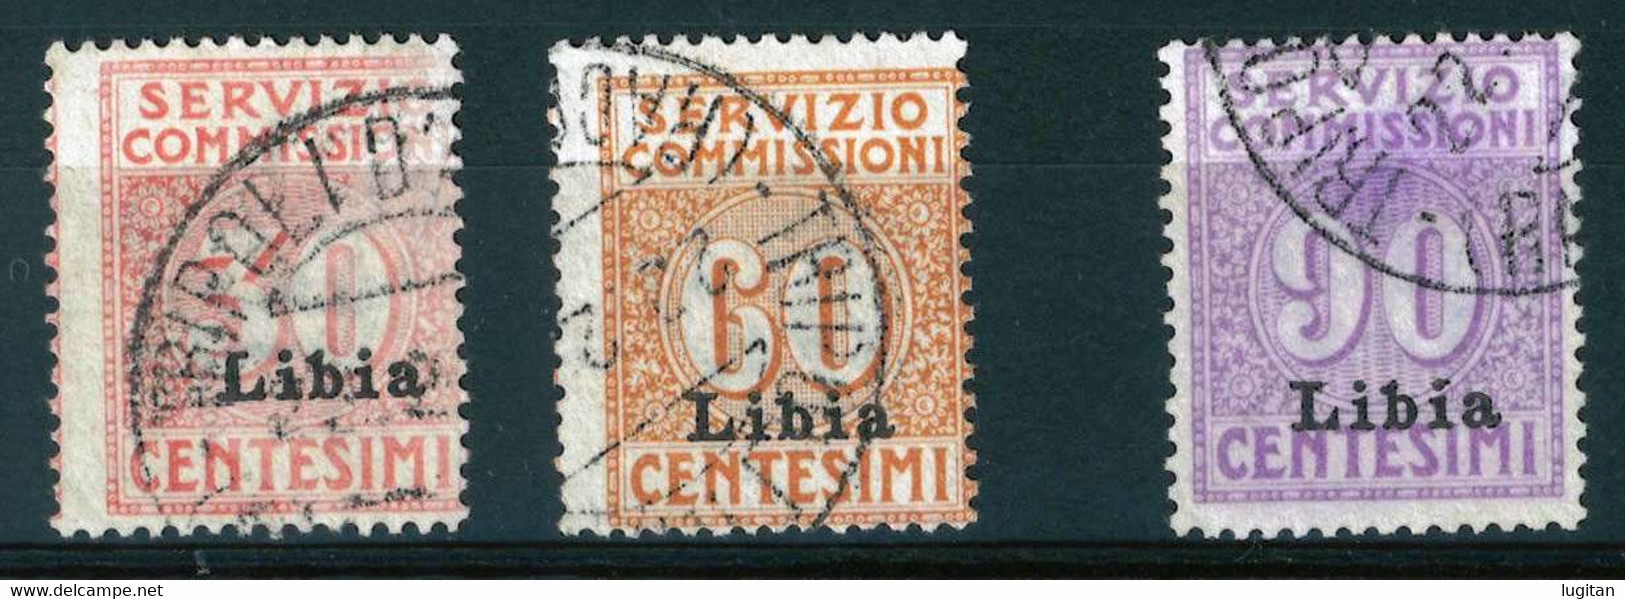 LIBIA - COLONIE ITALIANE - ANNO 1915 - SERVIZIO COMMISSIONI SASS. 1/3 - RARA - USATA - Libia